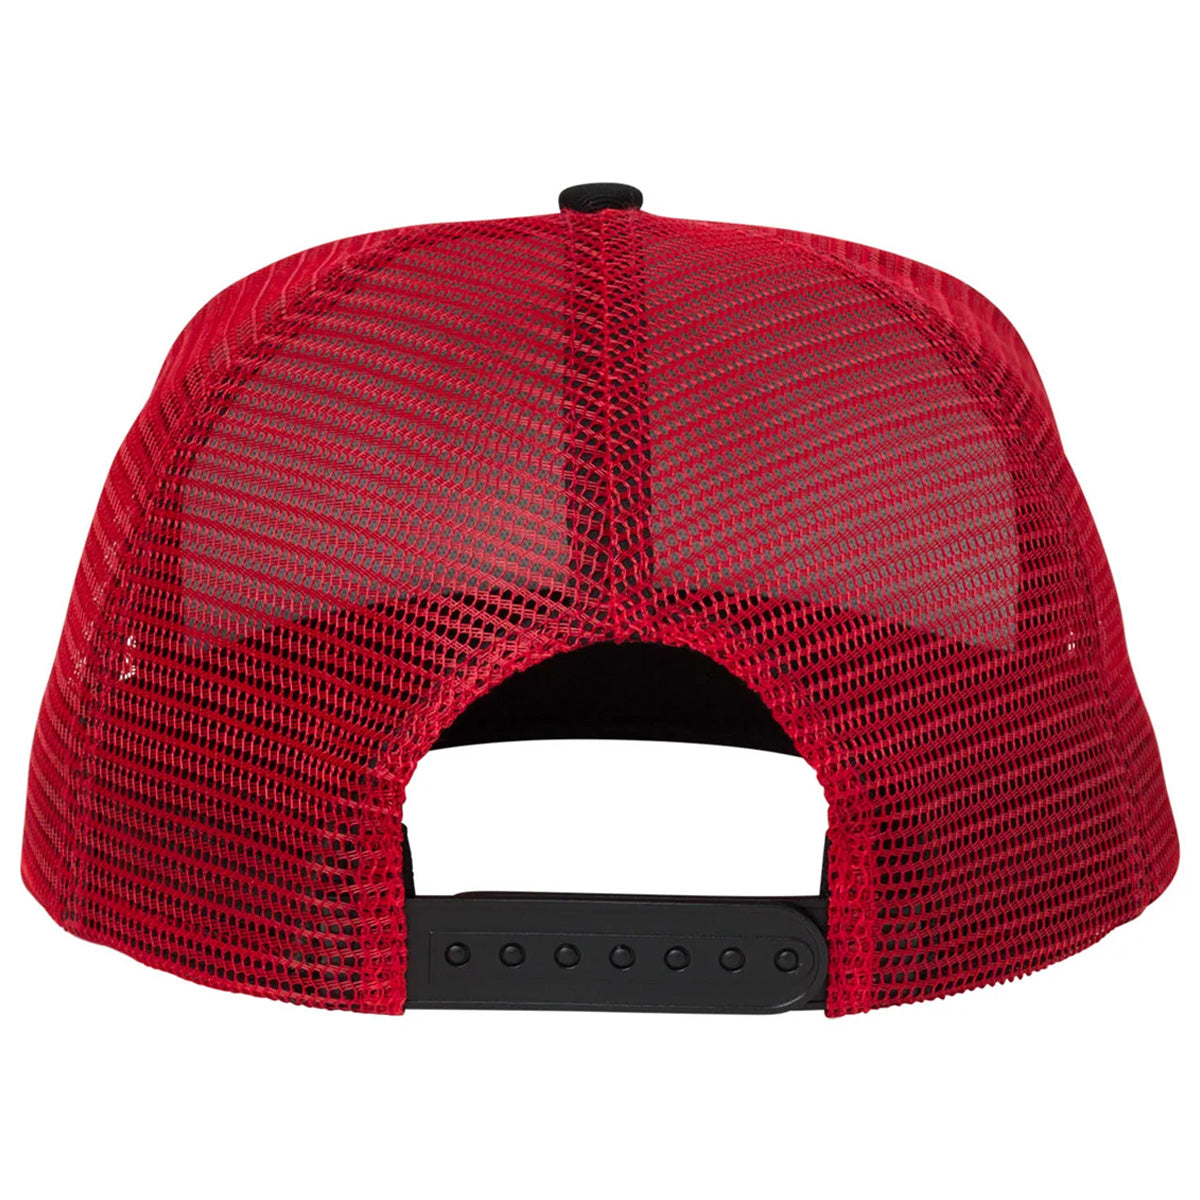 Santa Cruz Classic Dot Mesh Trucker Hat - Red/White/Black image 2